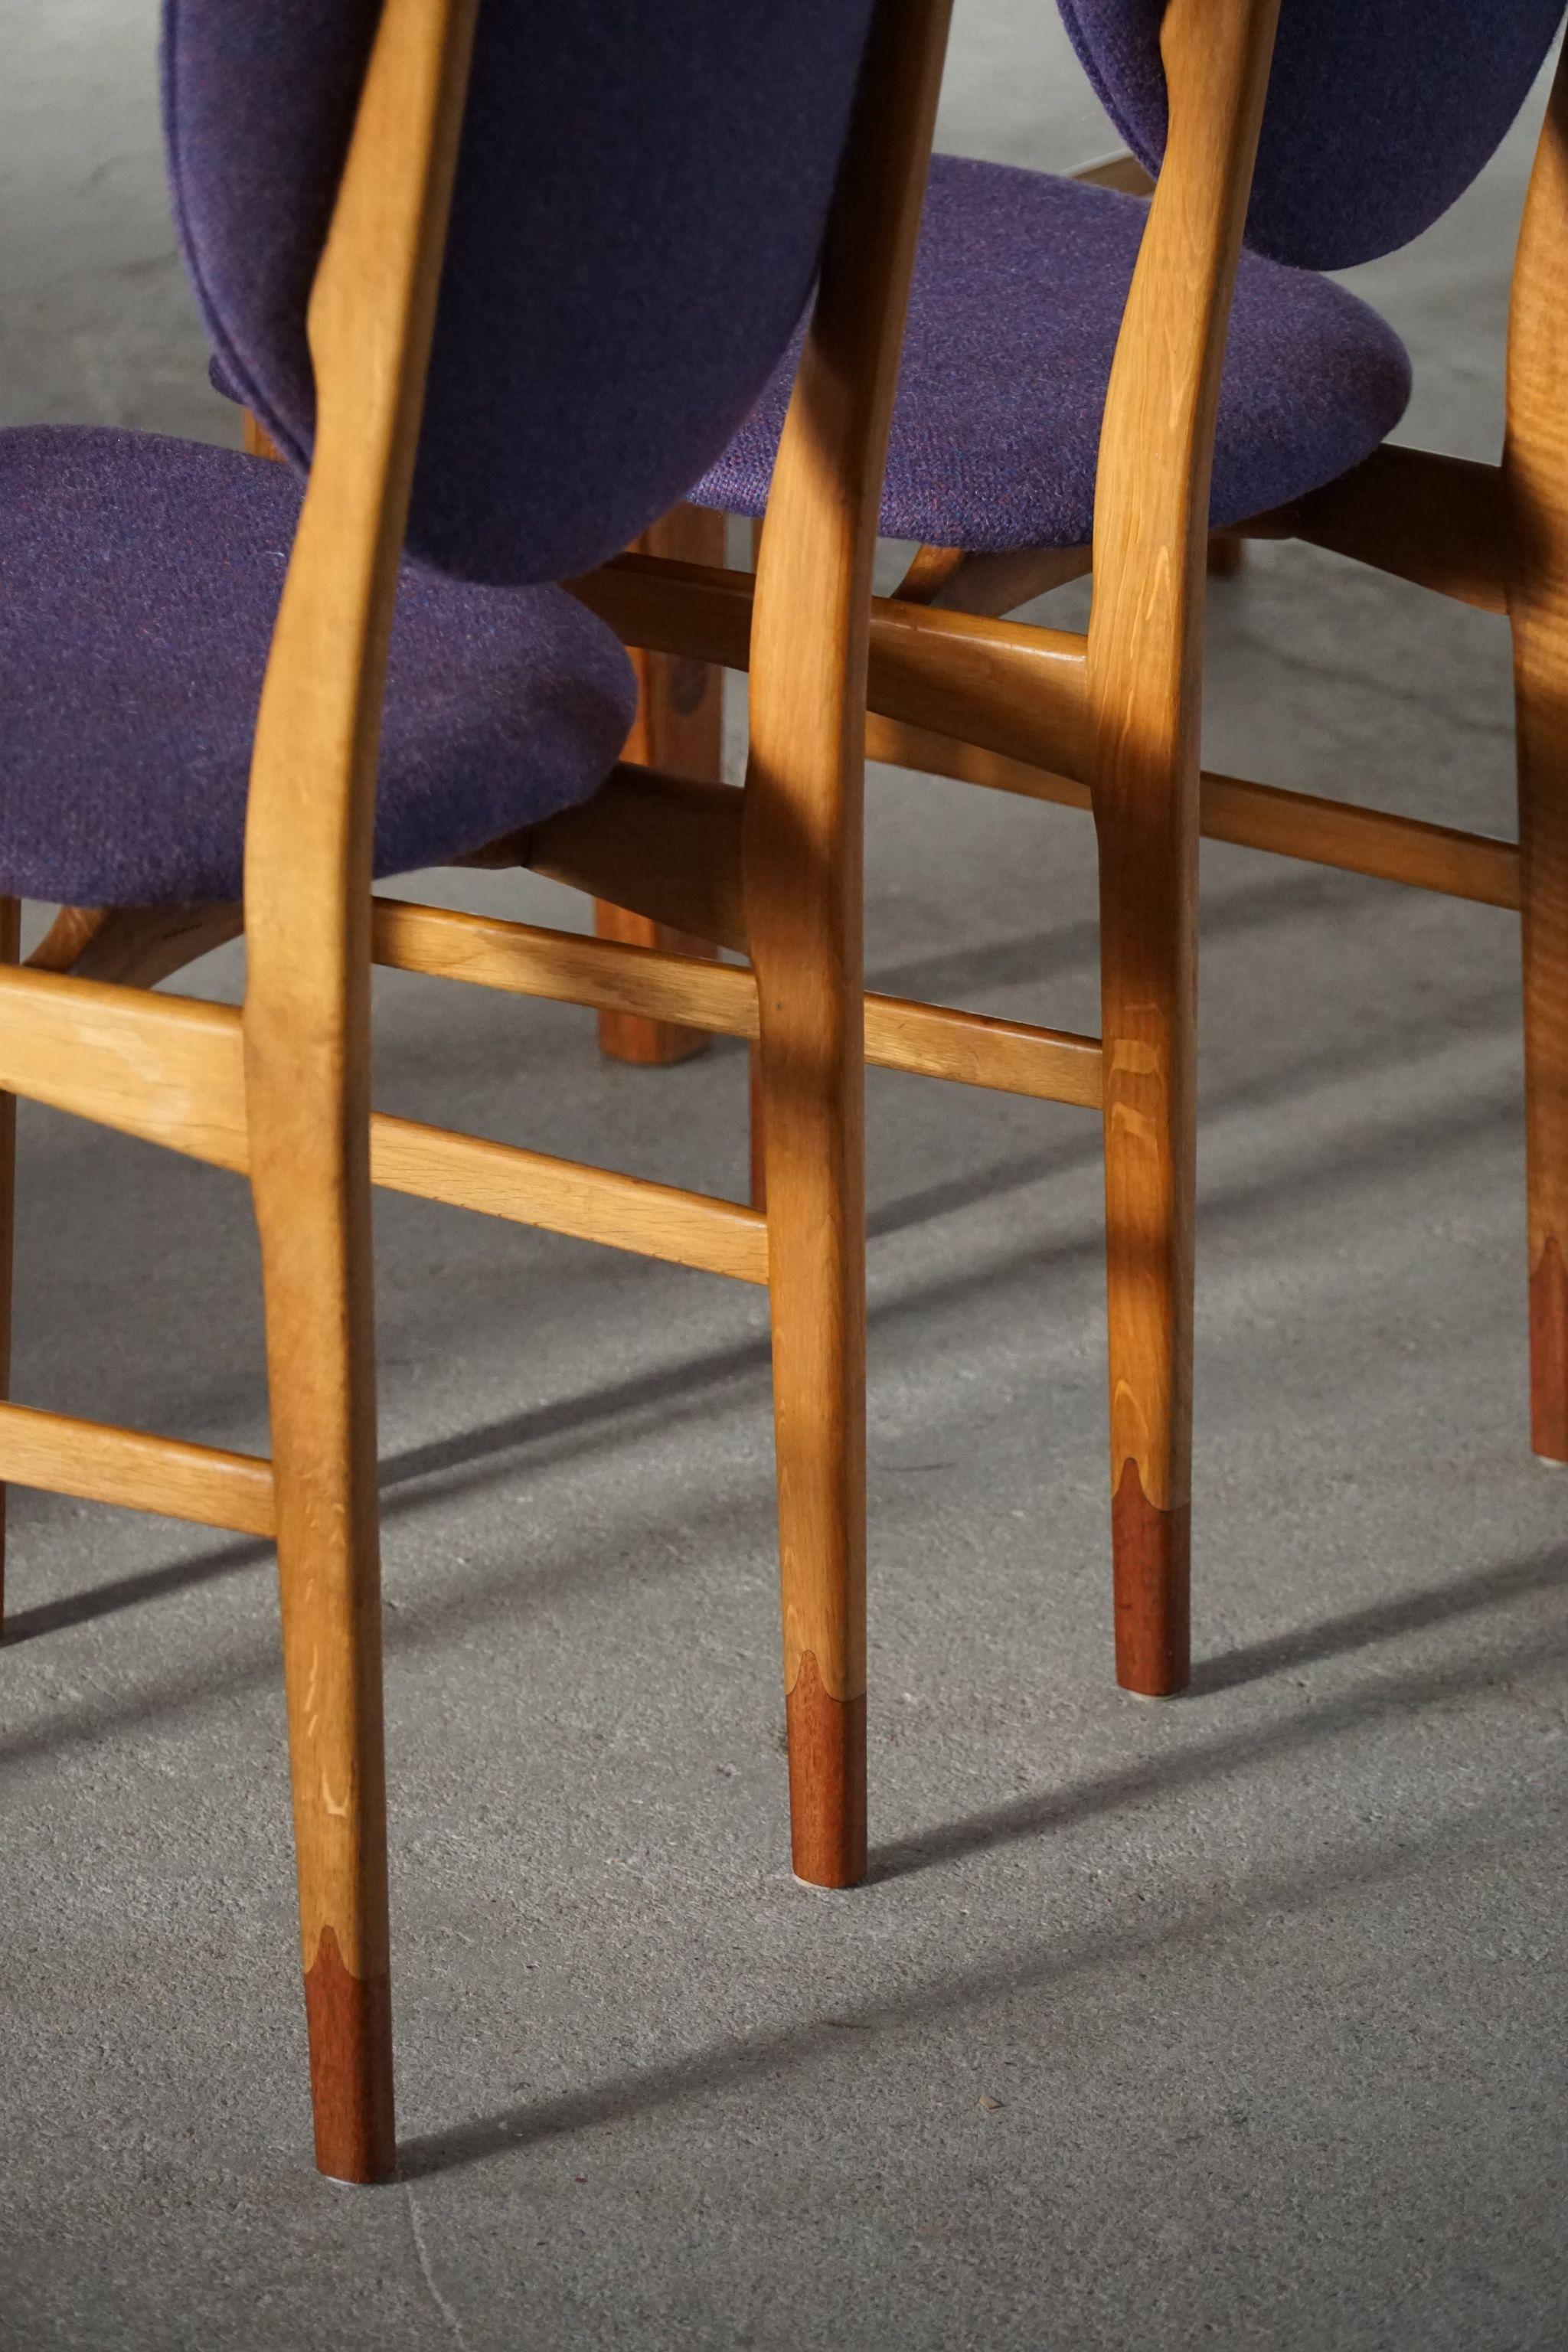 20th Century Danish Modern, Set of 6 Chairs in Teak & Oak, Nils and Eva Koppel, 1950s